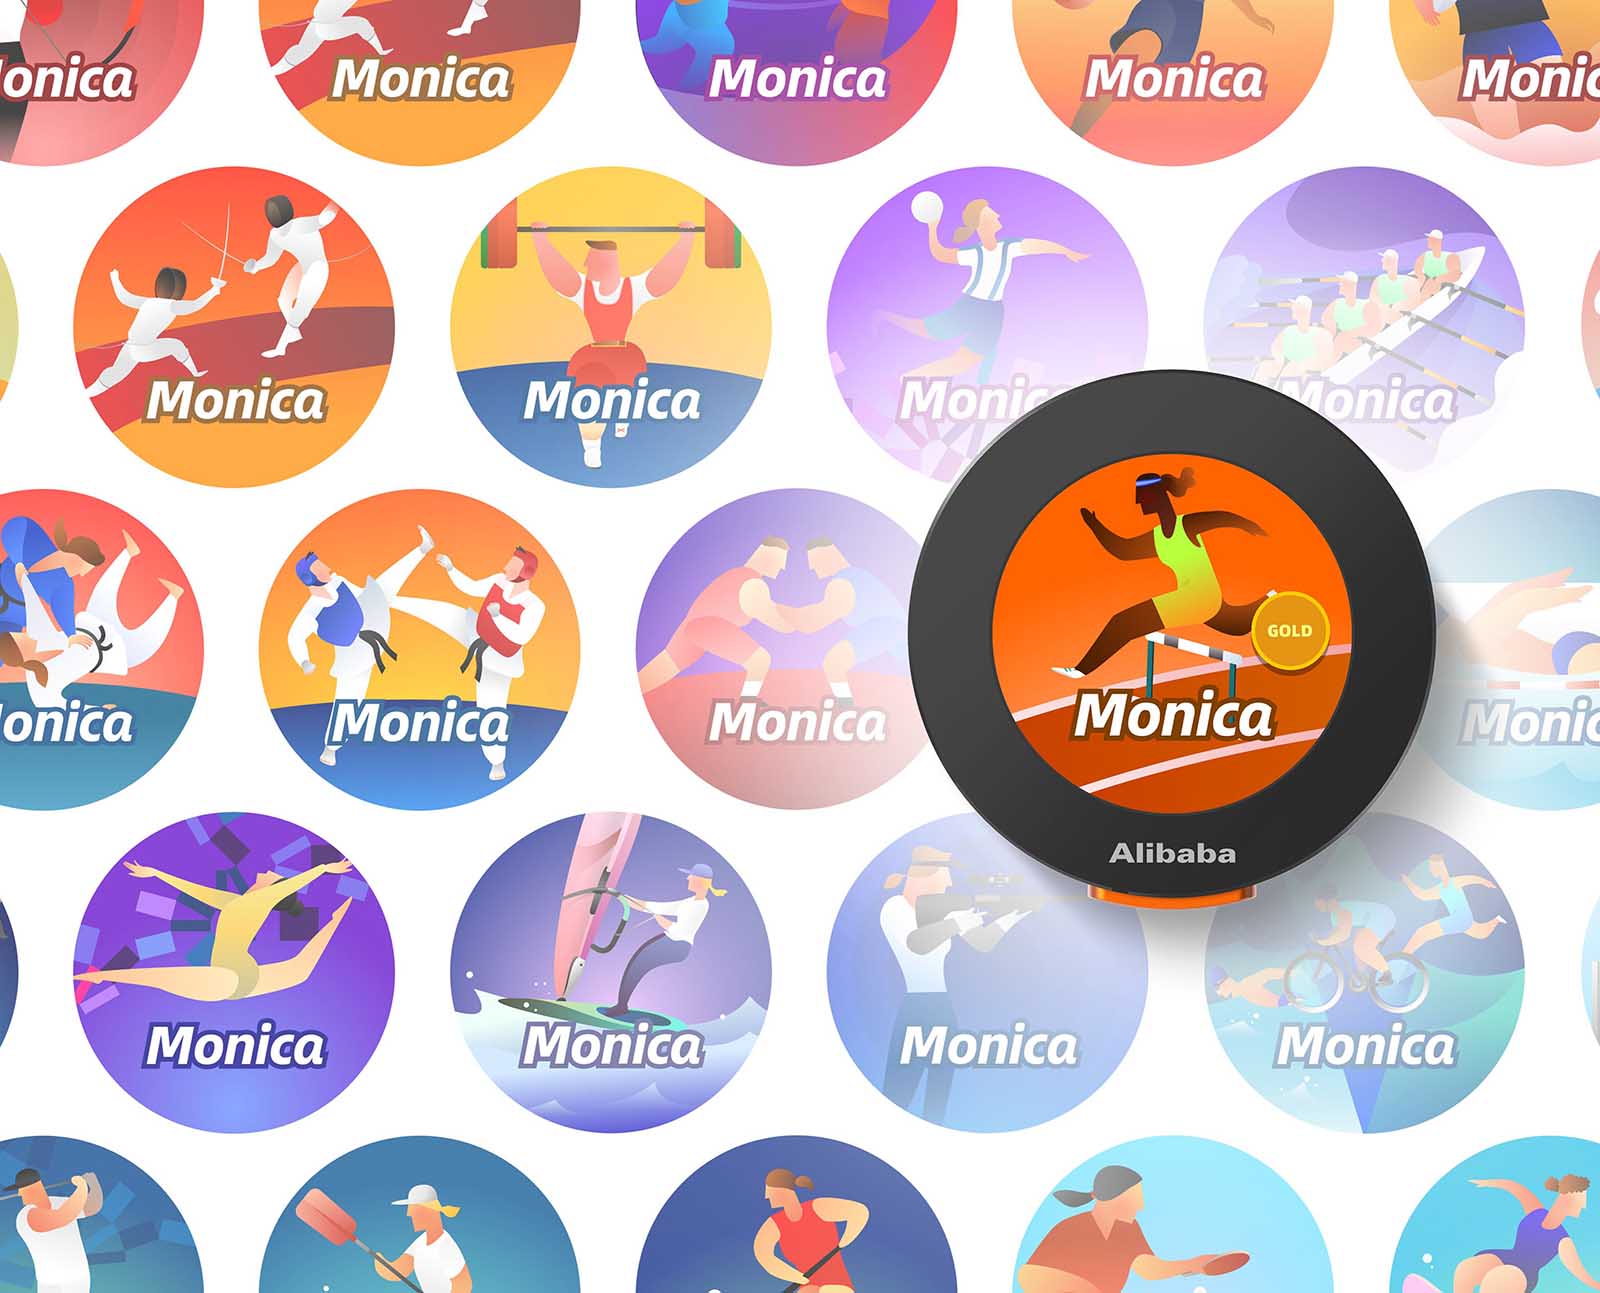 Alibaba Provides Cloud Pin at the Olympic Games for Media Professionals at Tokyo 2020